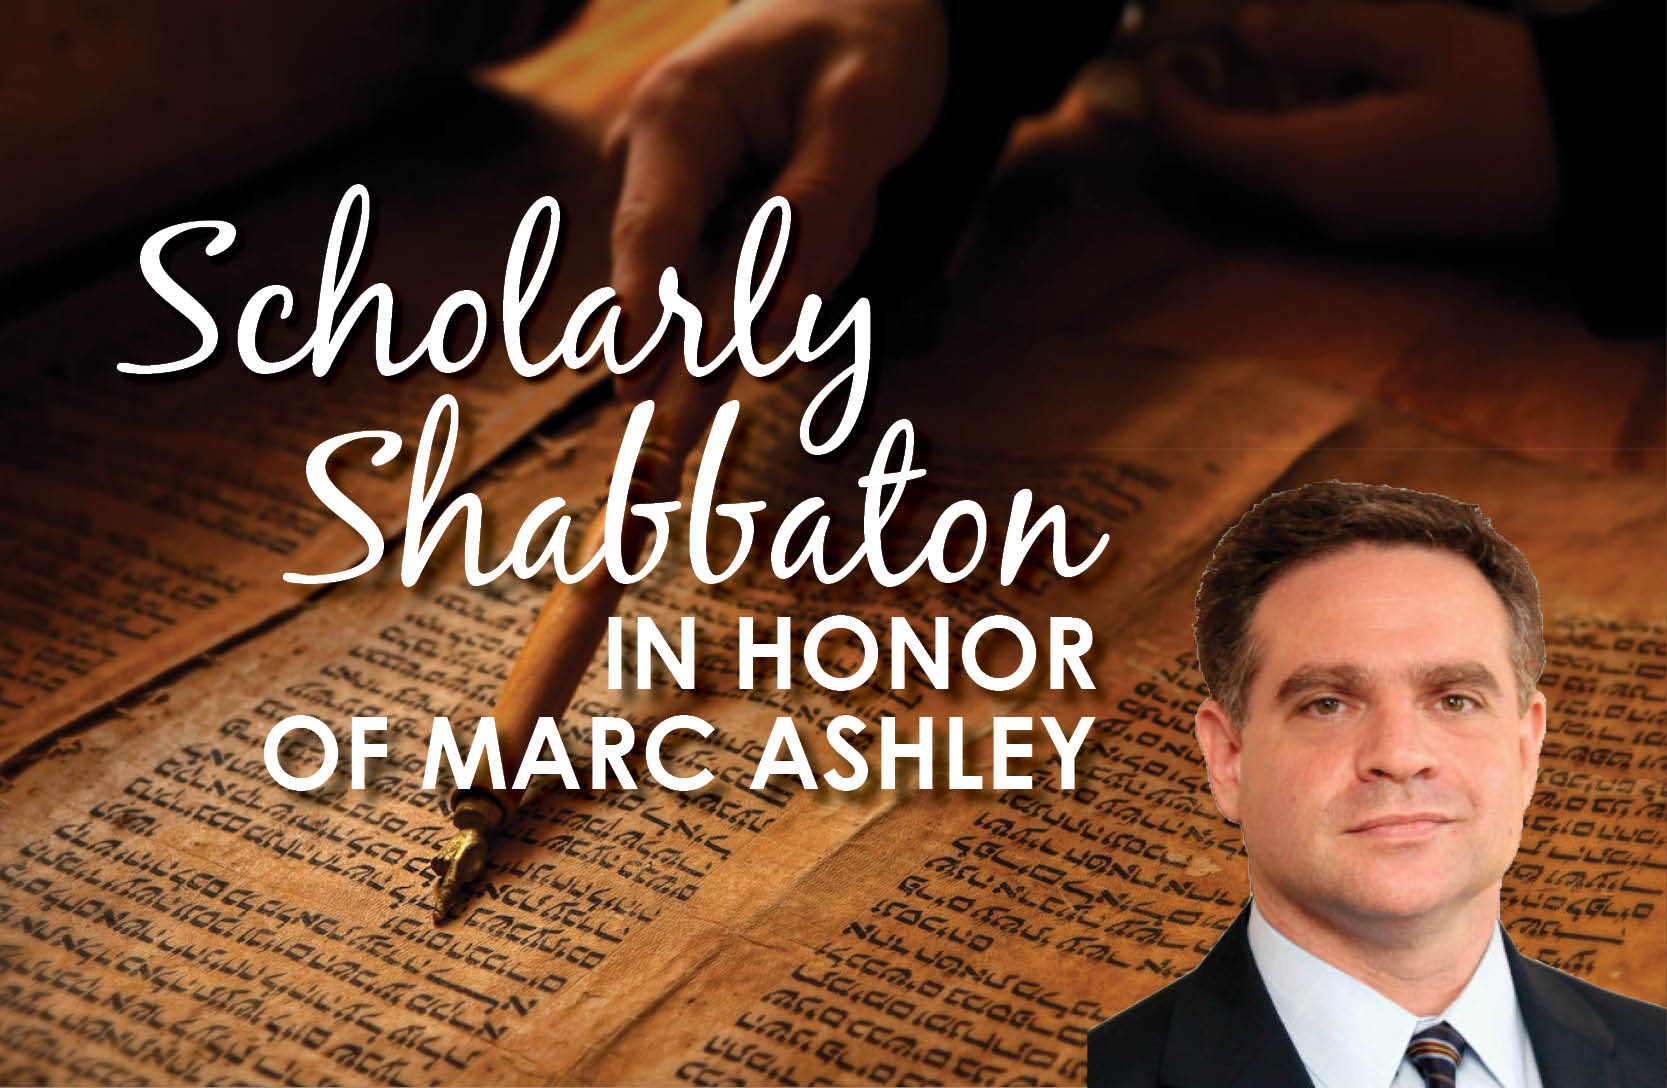 Scholarly Shabbaton in honor of Marc Ashley